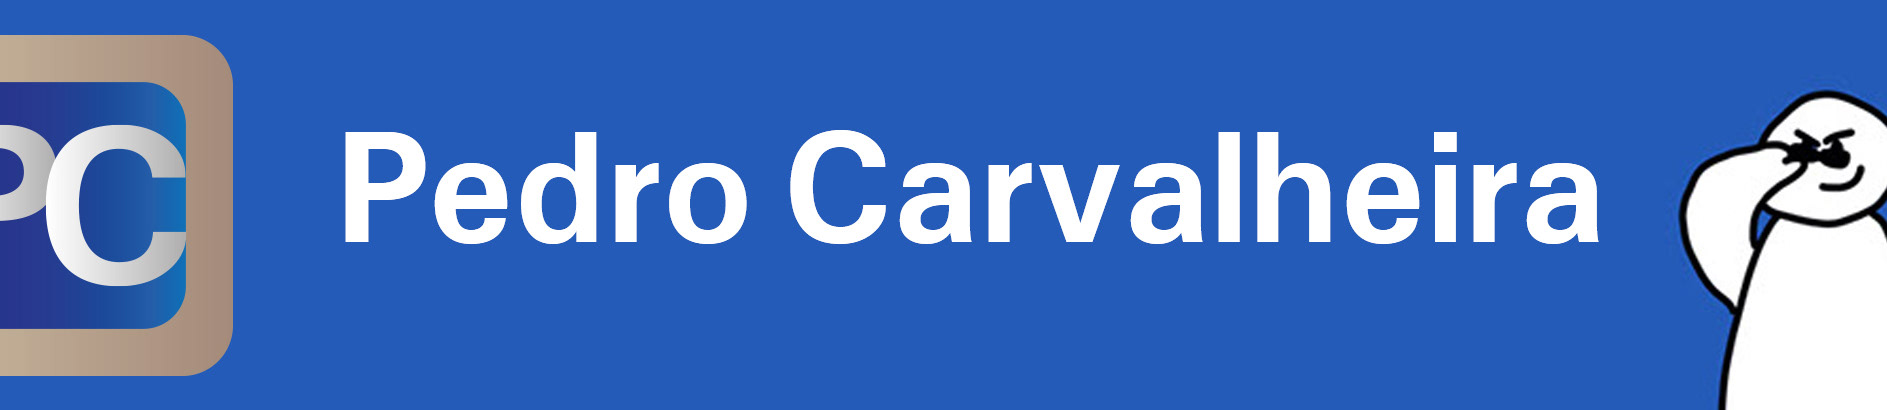 Pedro Carvalheira's profile banner